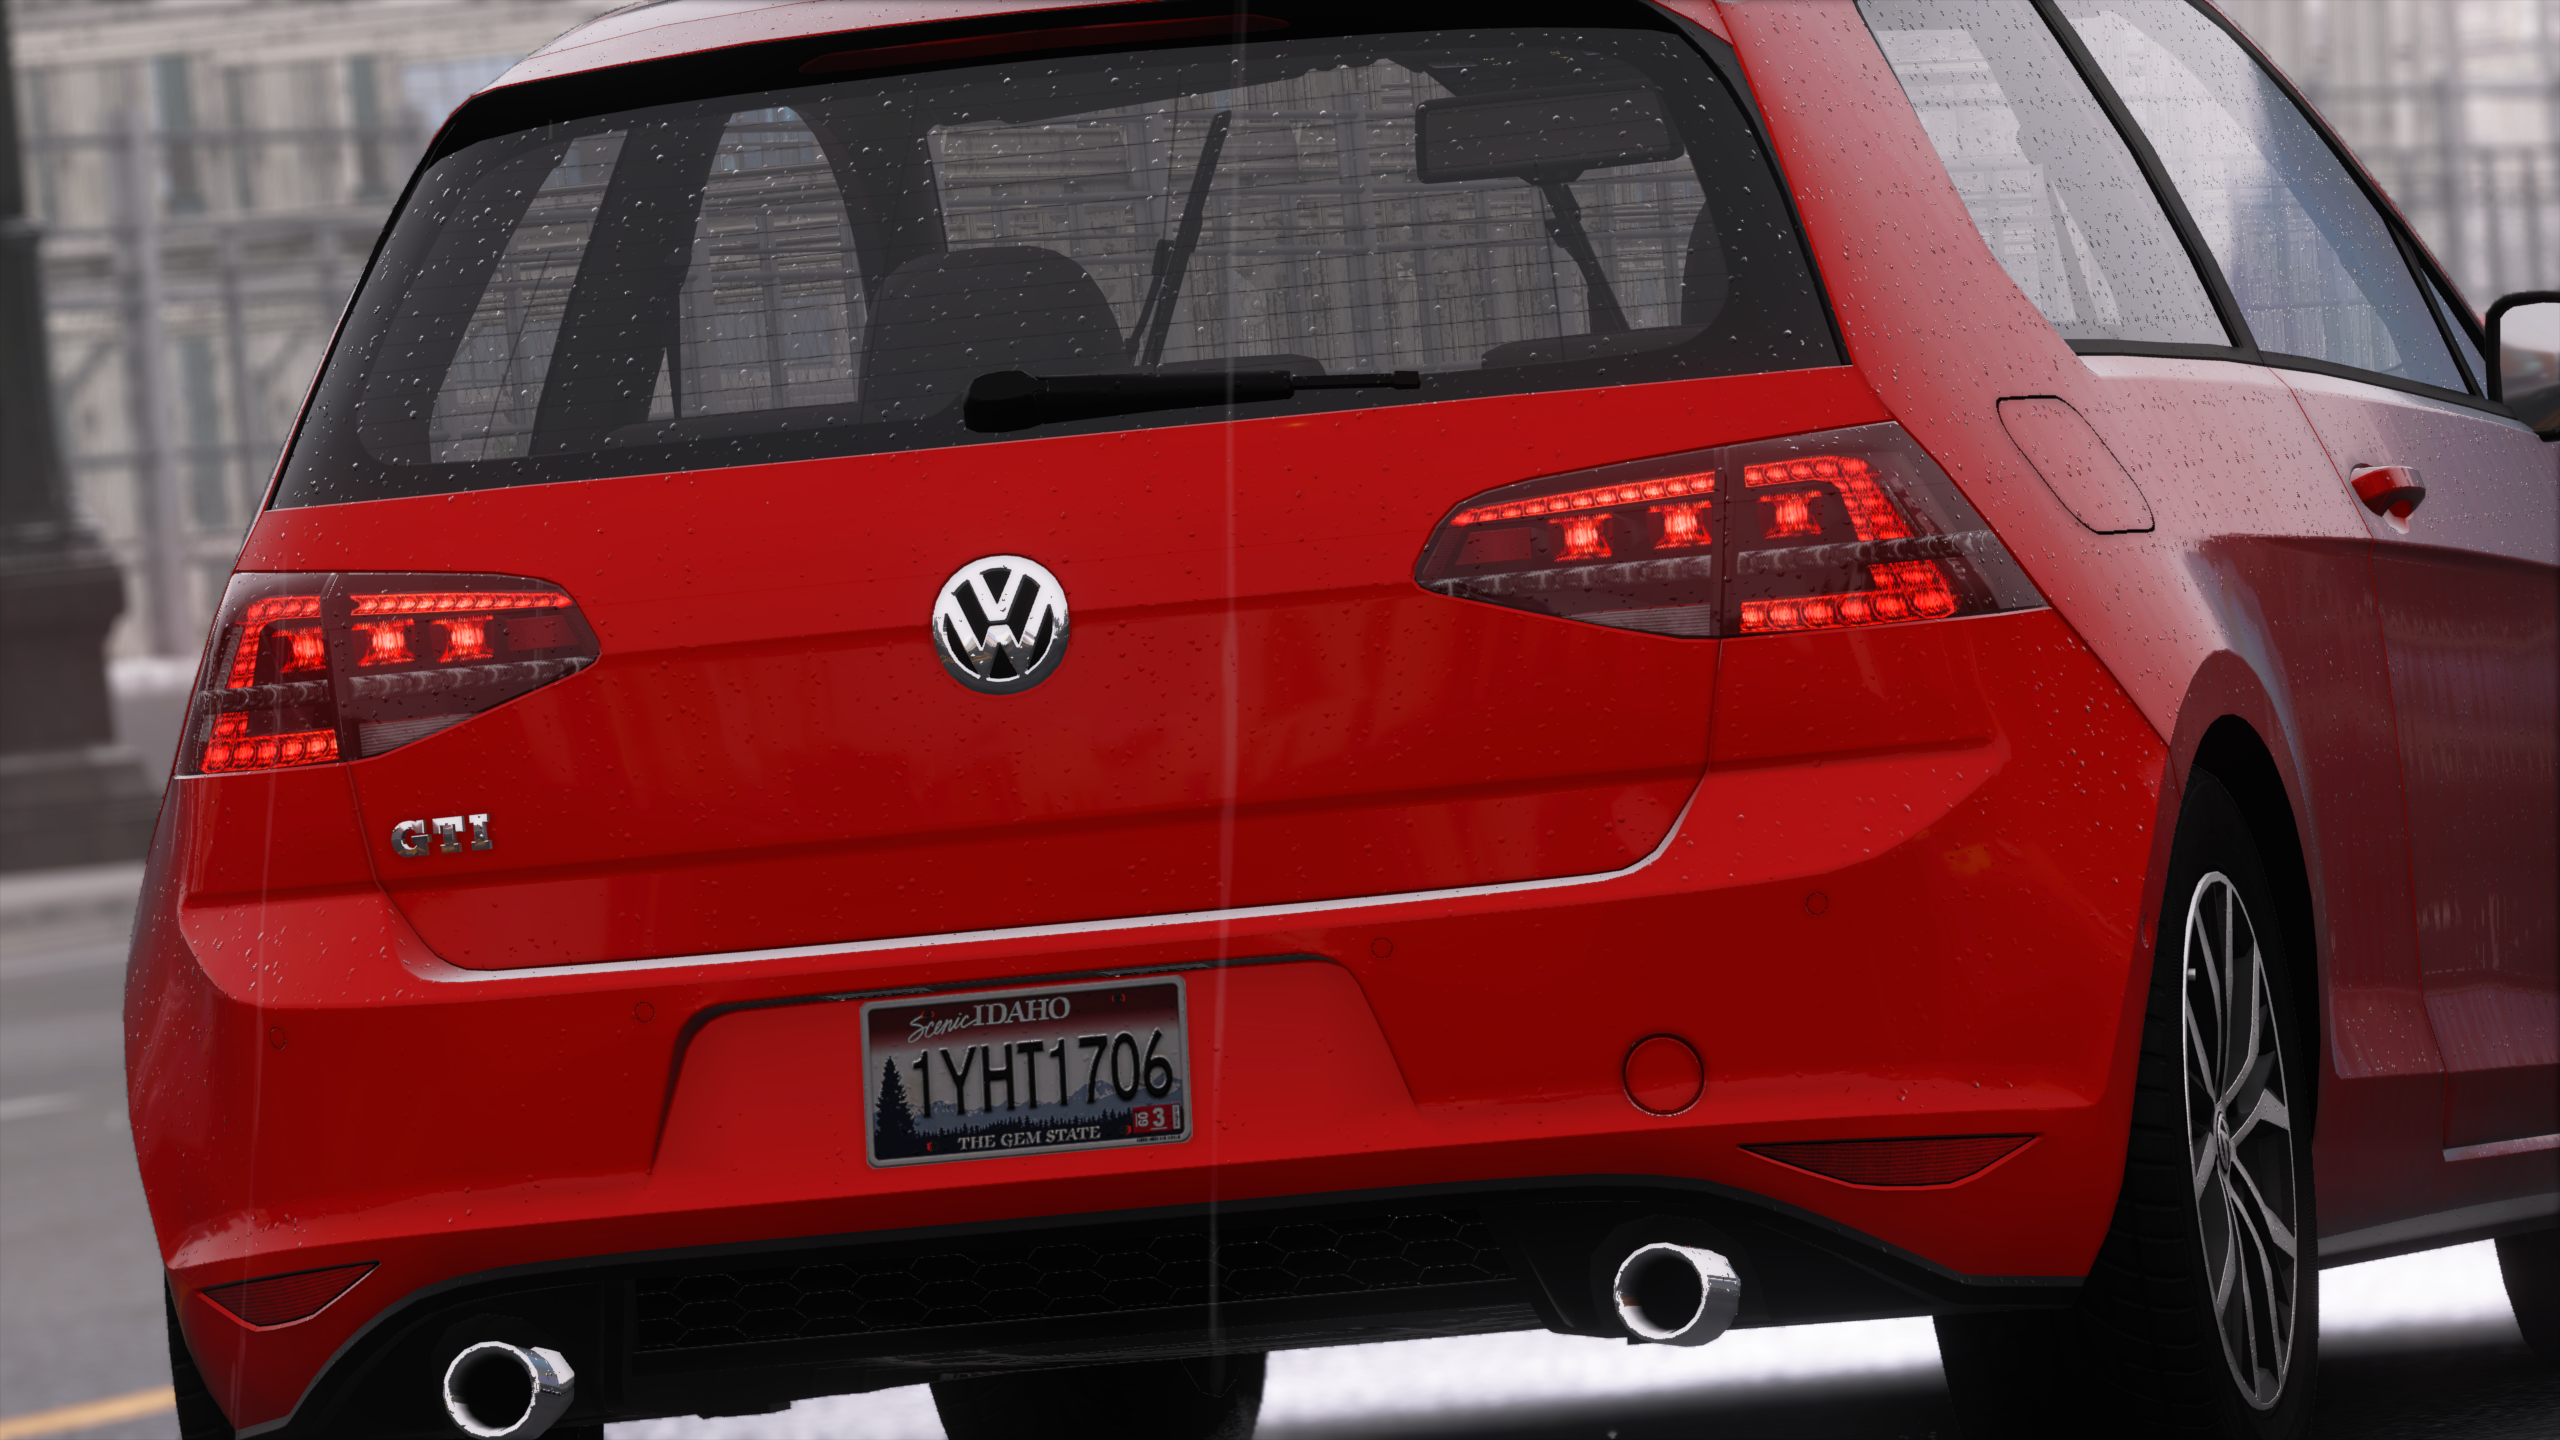 Volkswagen Golf GTi Car Top Gear Red Cars Vehicle Idaho Golf 2560x1440